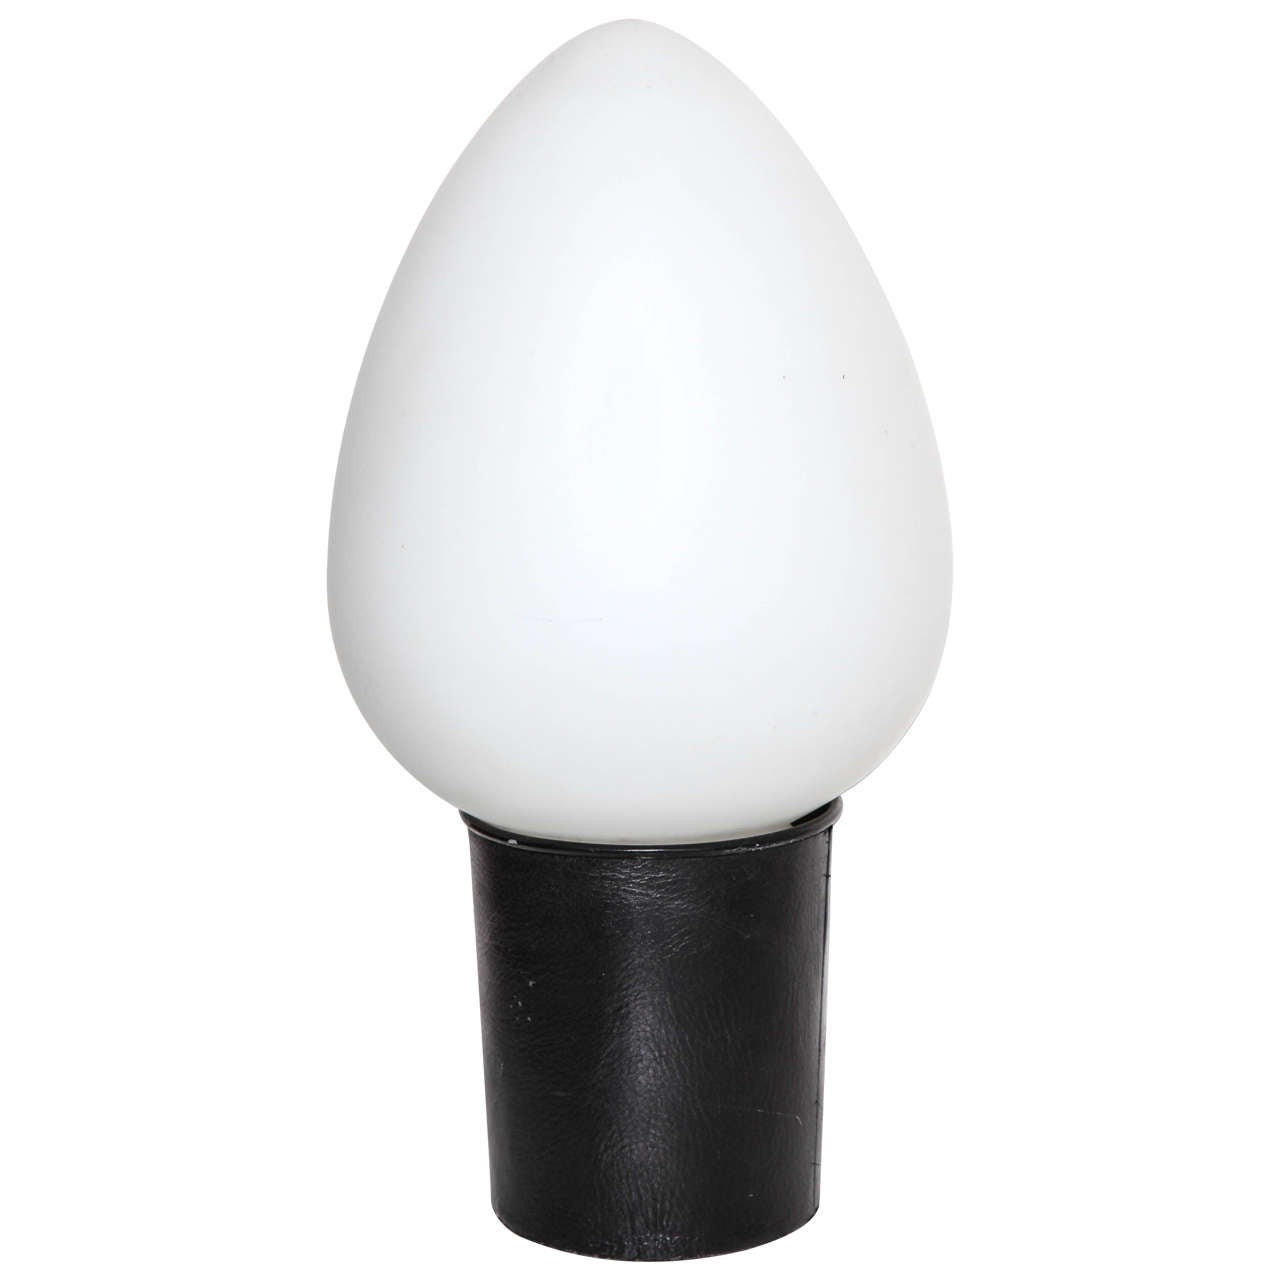 Late 1960's Laurel Lamp Co. "Pop Art" Black Egg Lamp with White Glass Shade